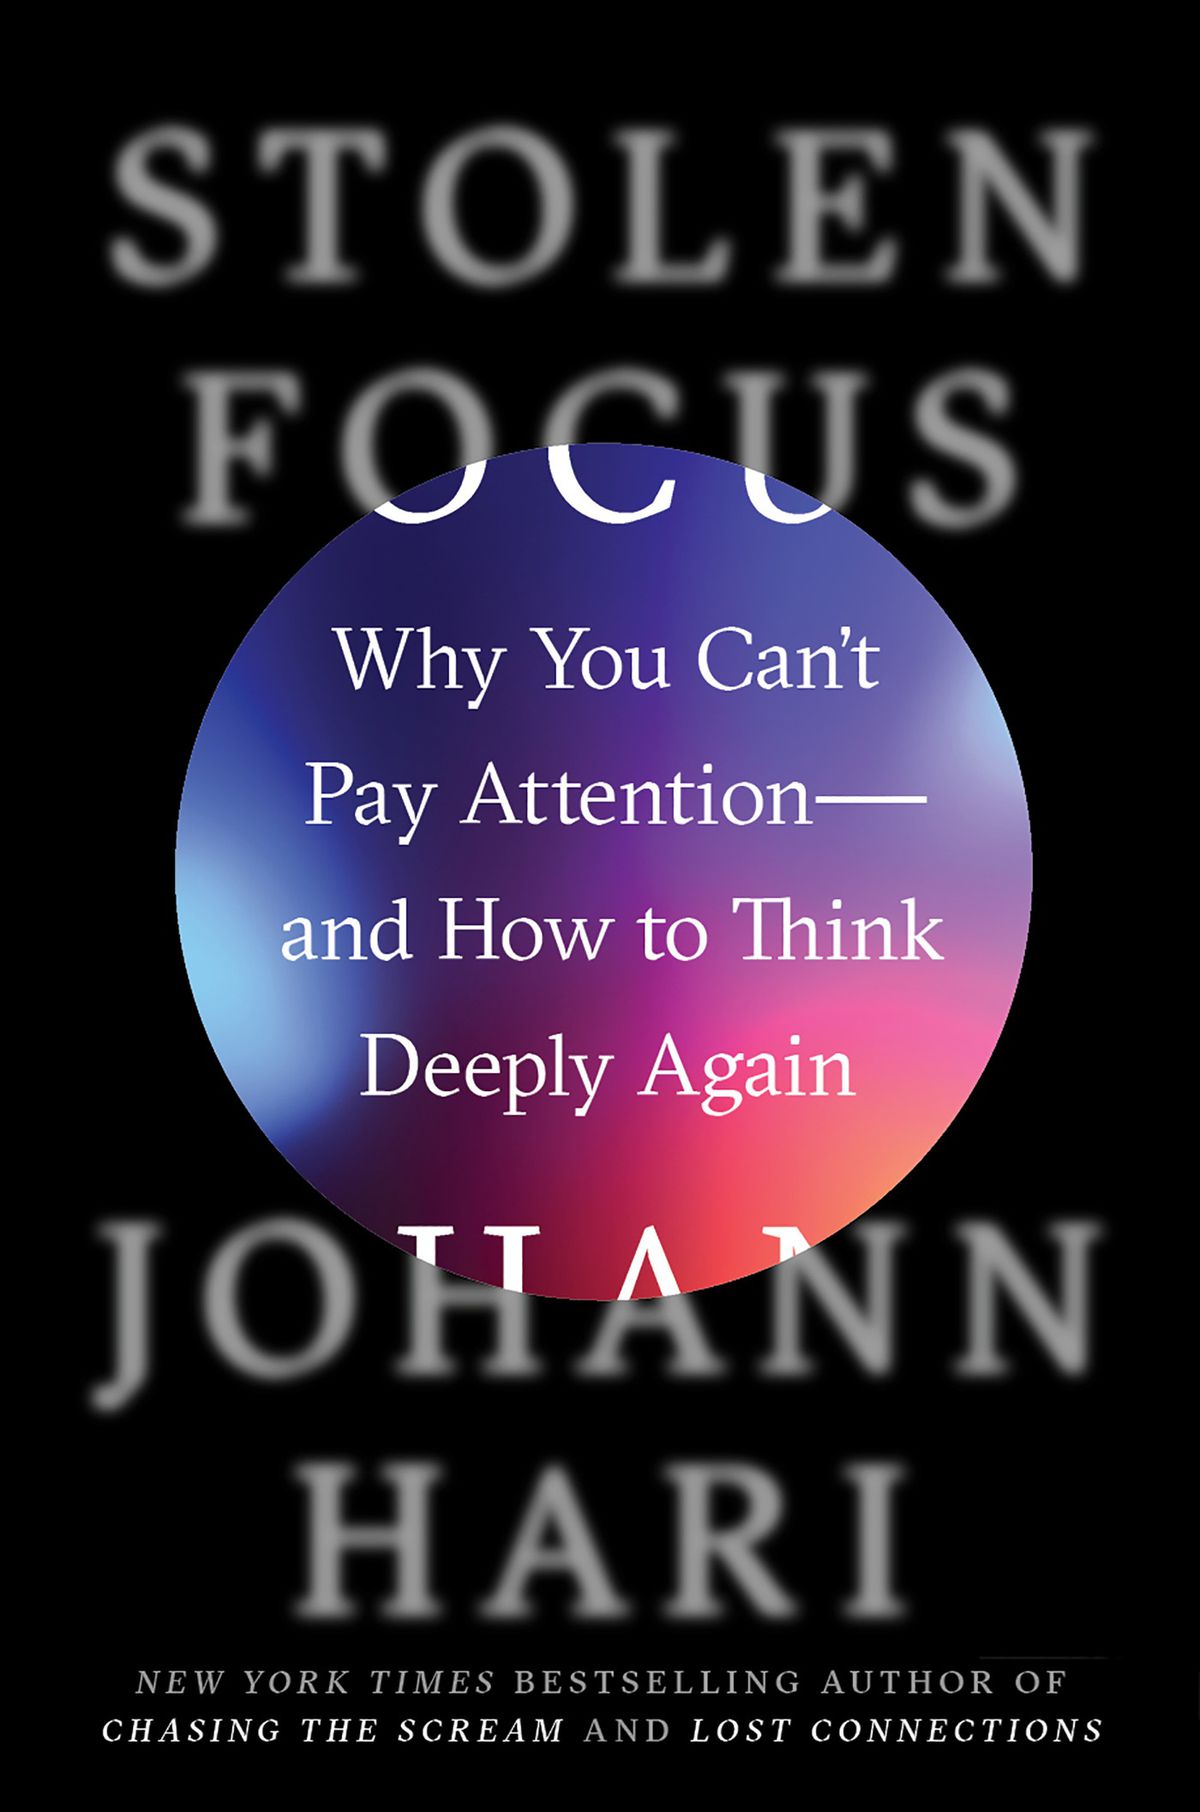 Stolen Focus: Johann Hari explains how your attention has been stolen